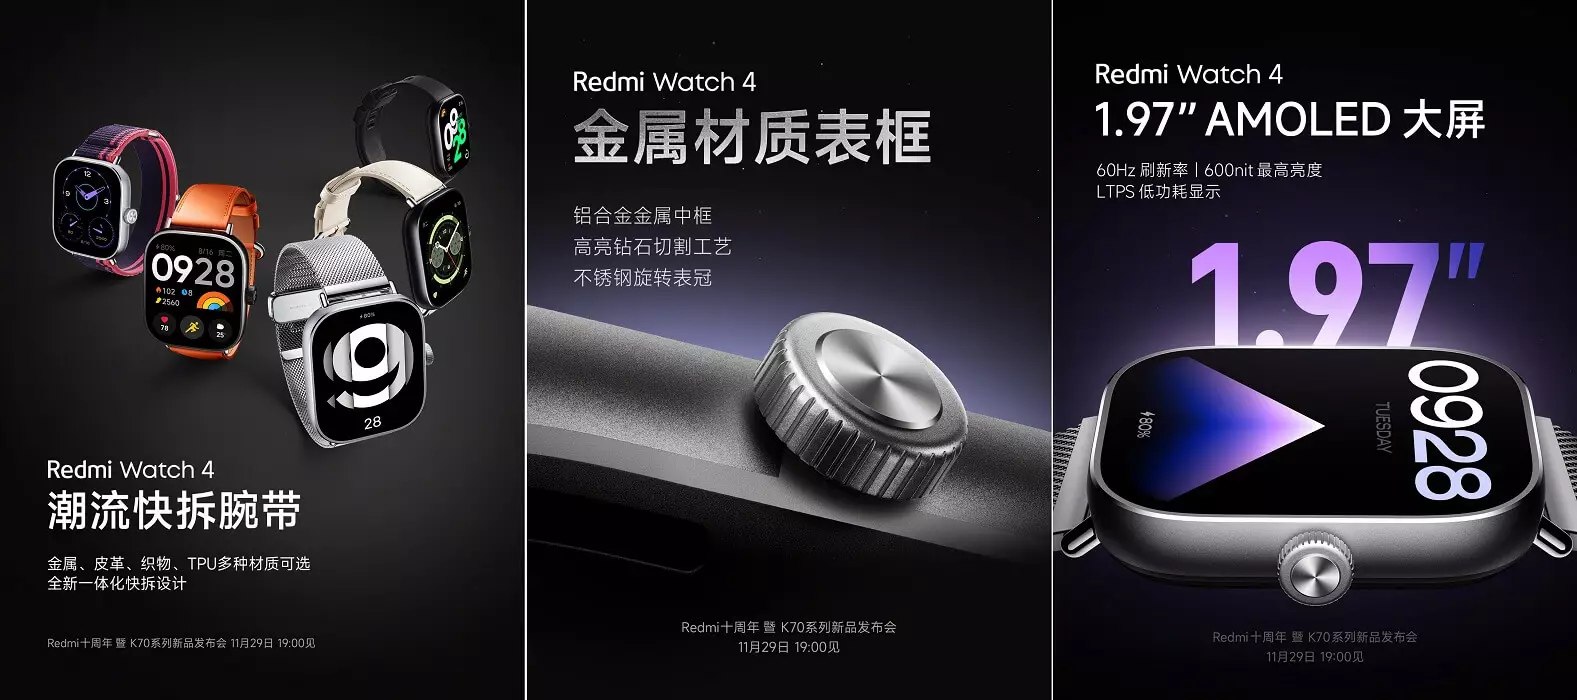 redmi watch 4 features cn.